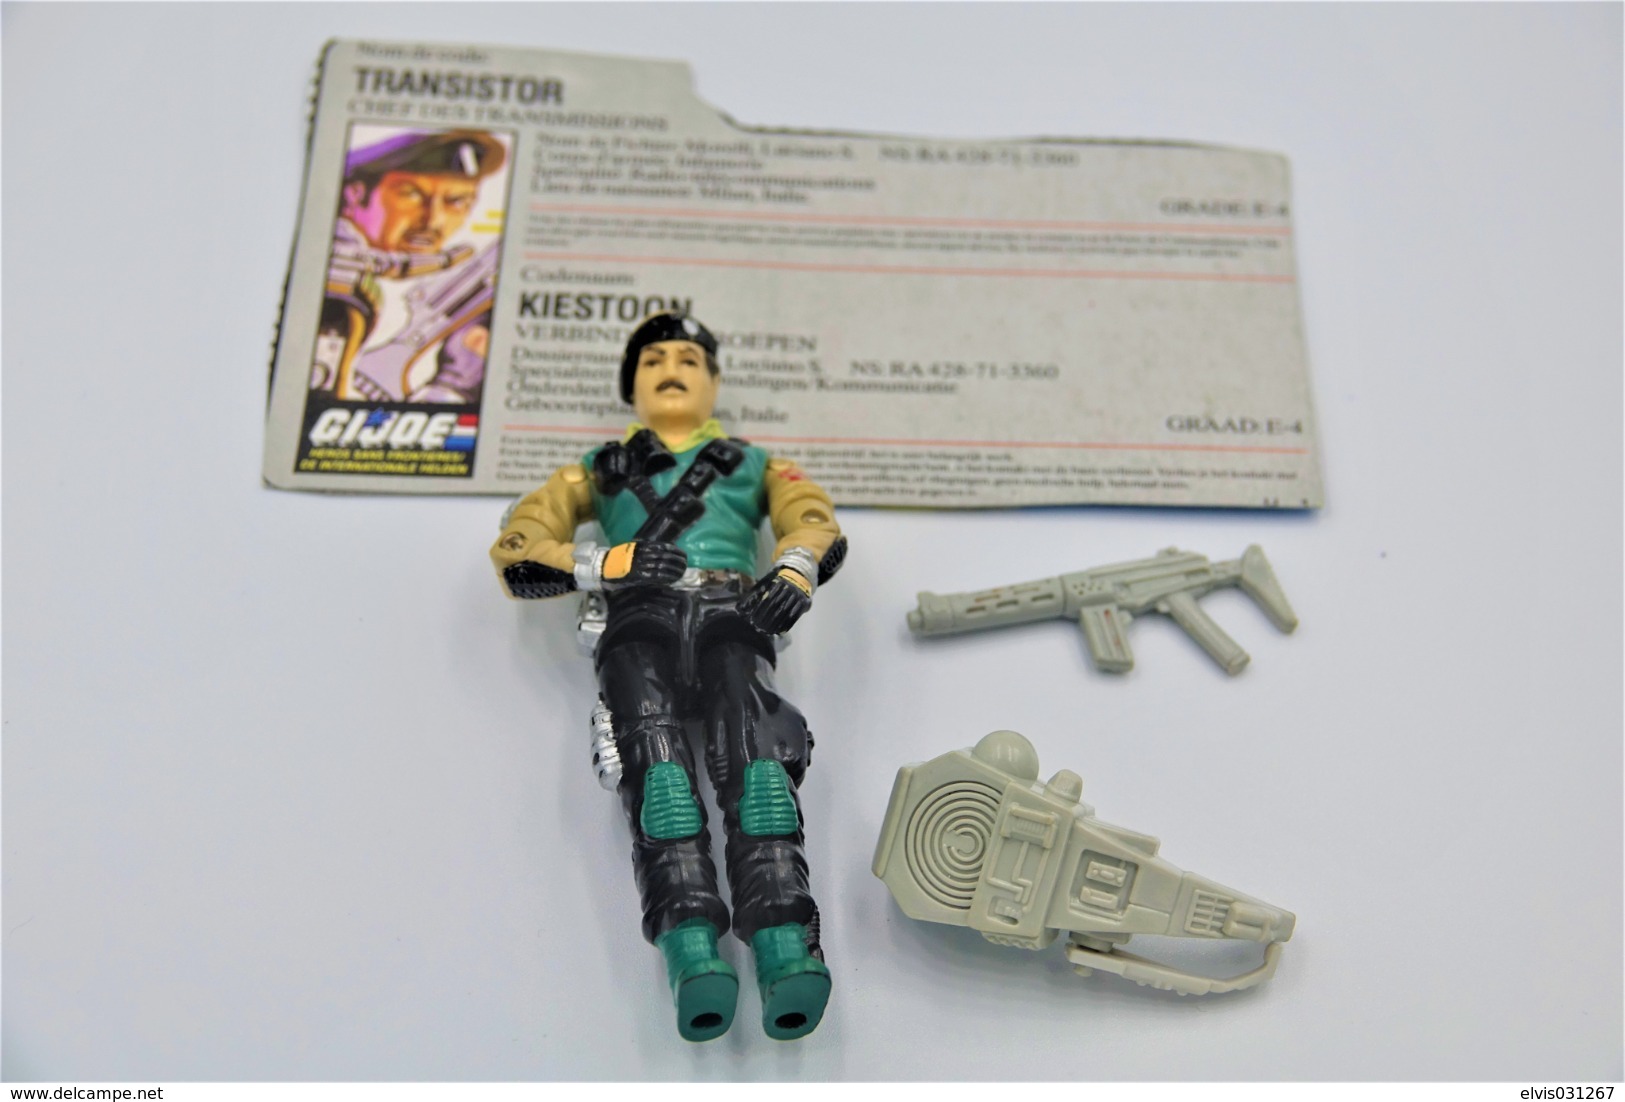 Vintage ACTION FIGURE GI JOE : DIAL-TONE [Communications] With Accessories And Card- Original 1986 - Hasbro - GI JOE - Action Man